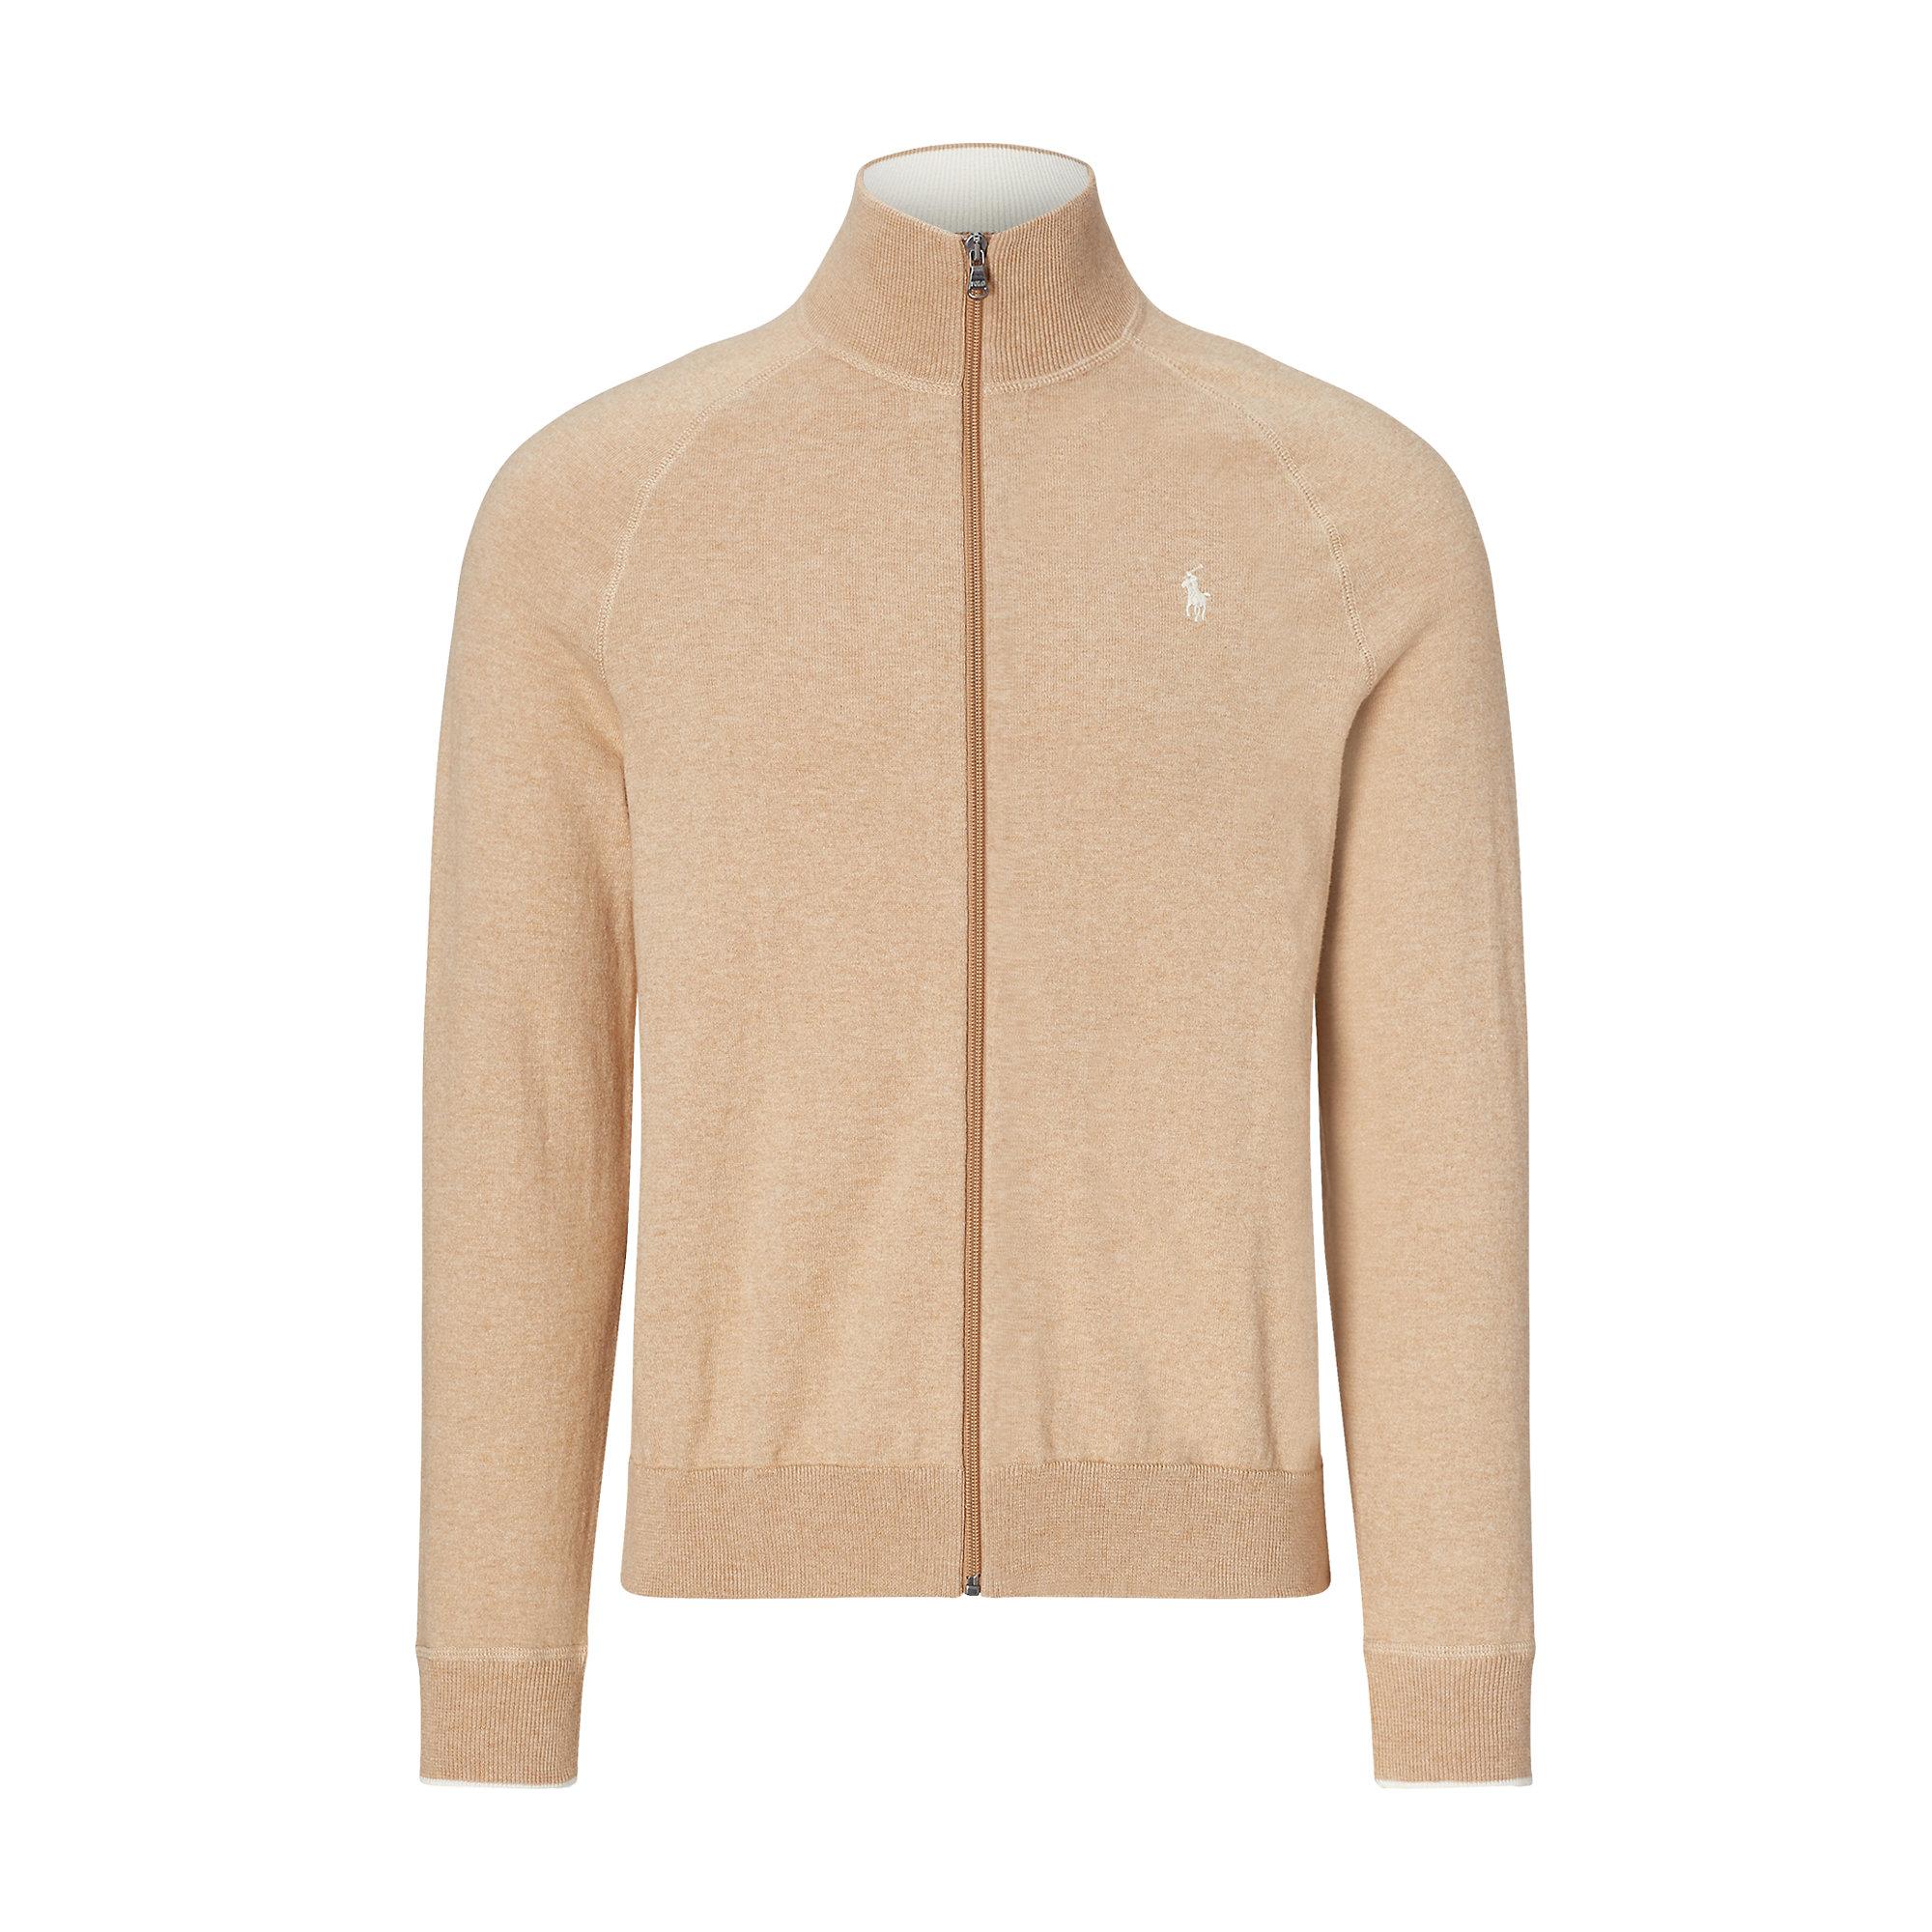 Polo ralph lauren Cotton Full-zip Sweater in Natural for Men | Lyst